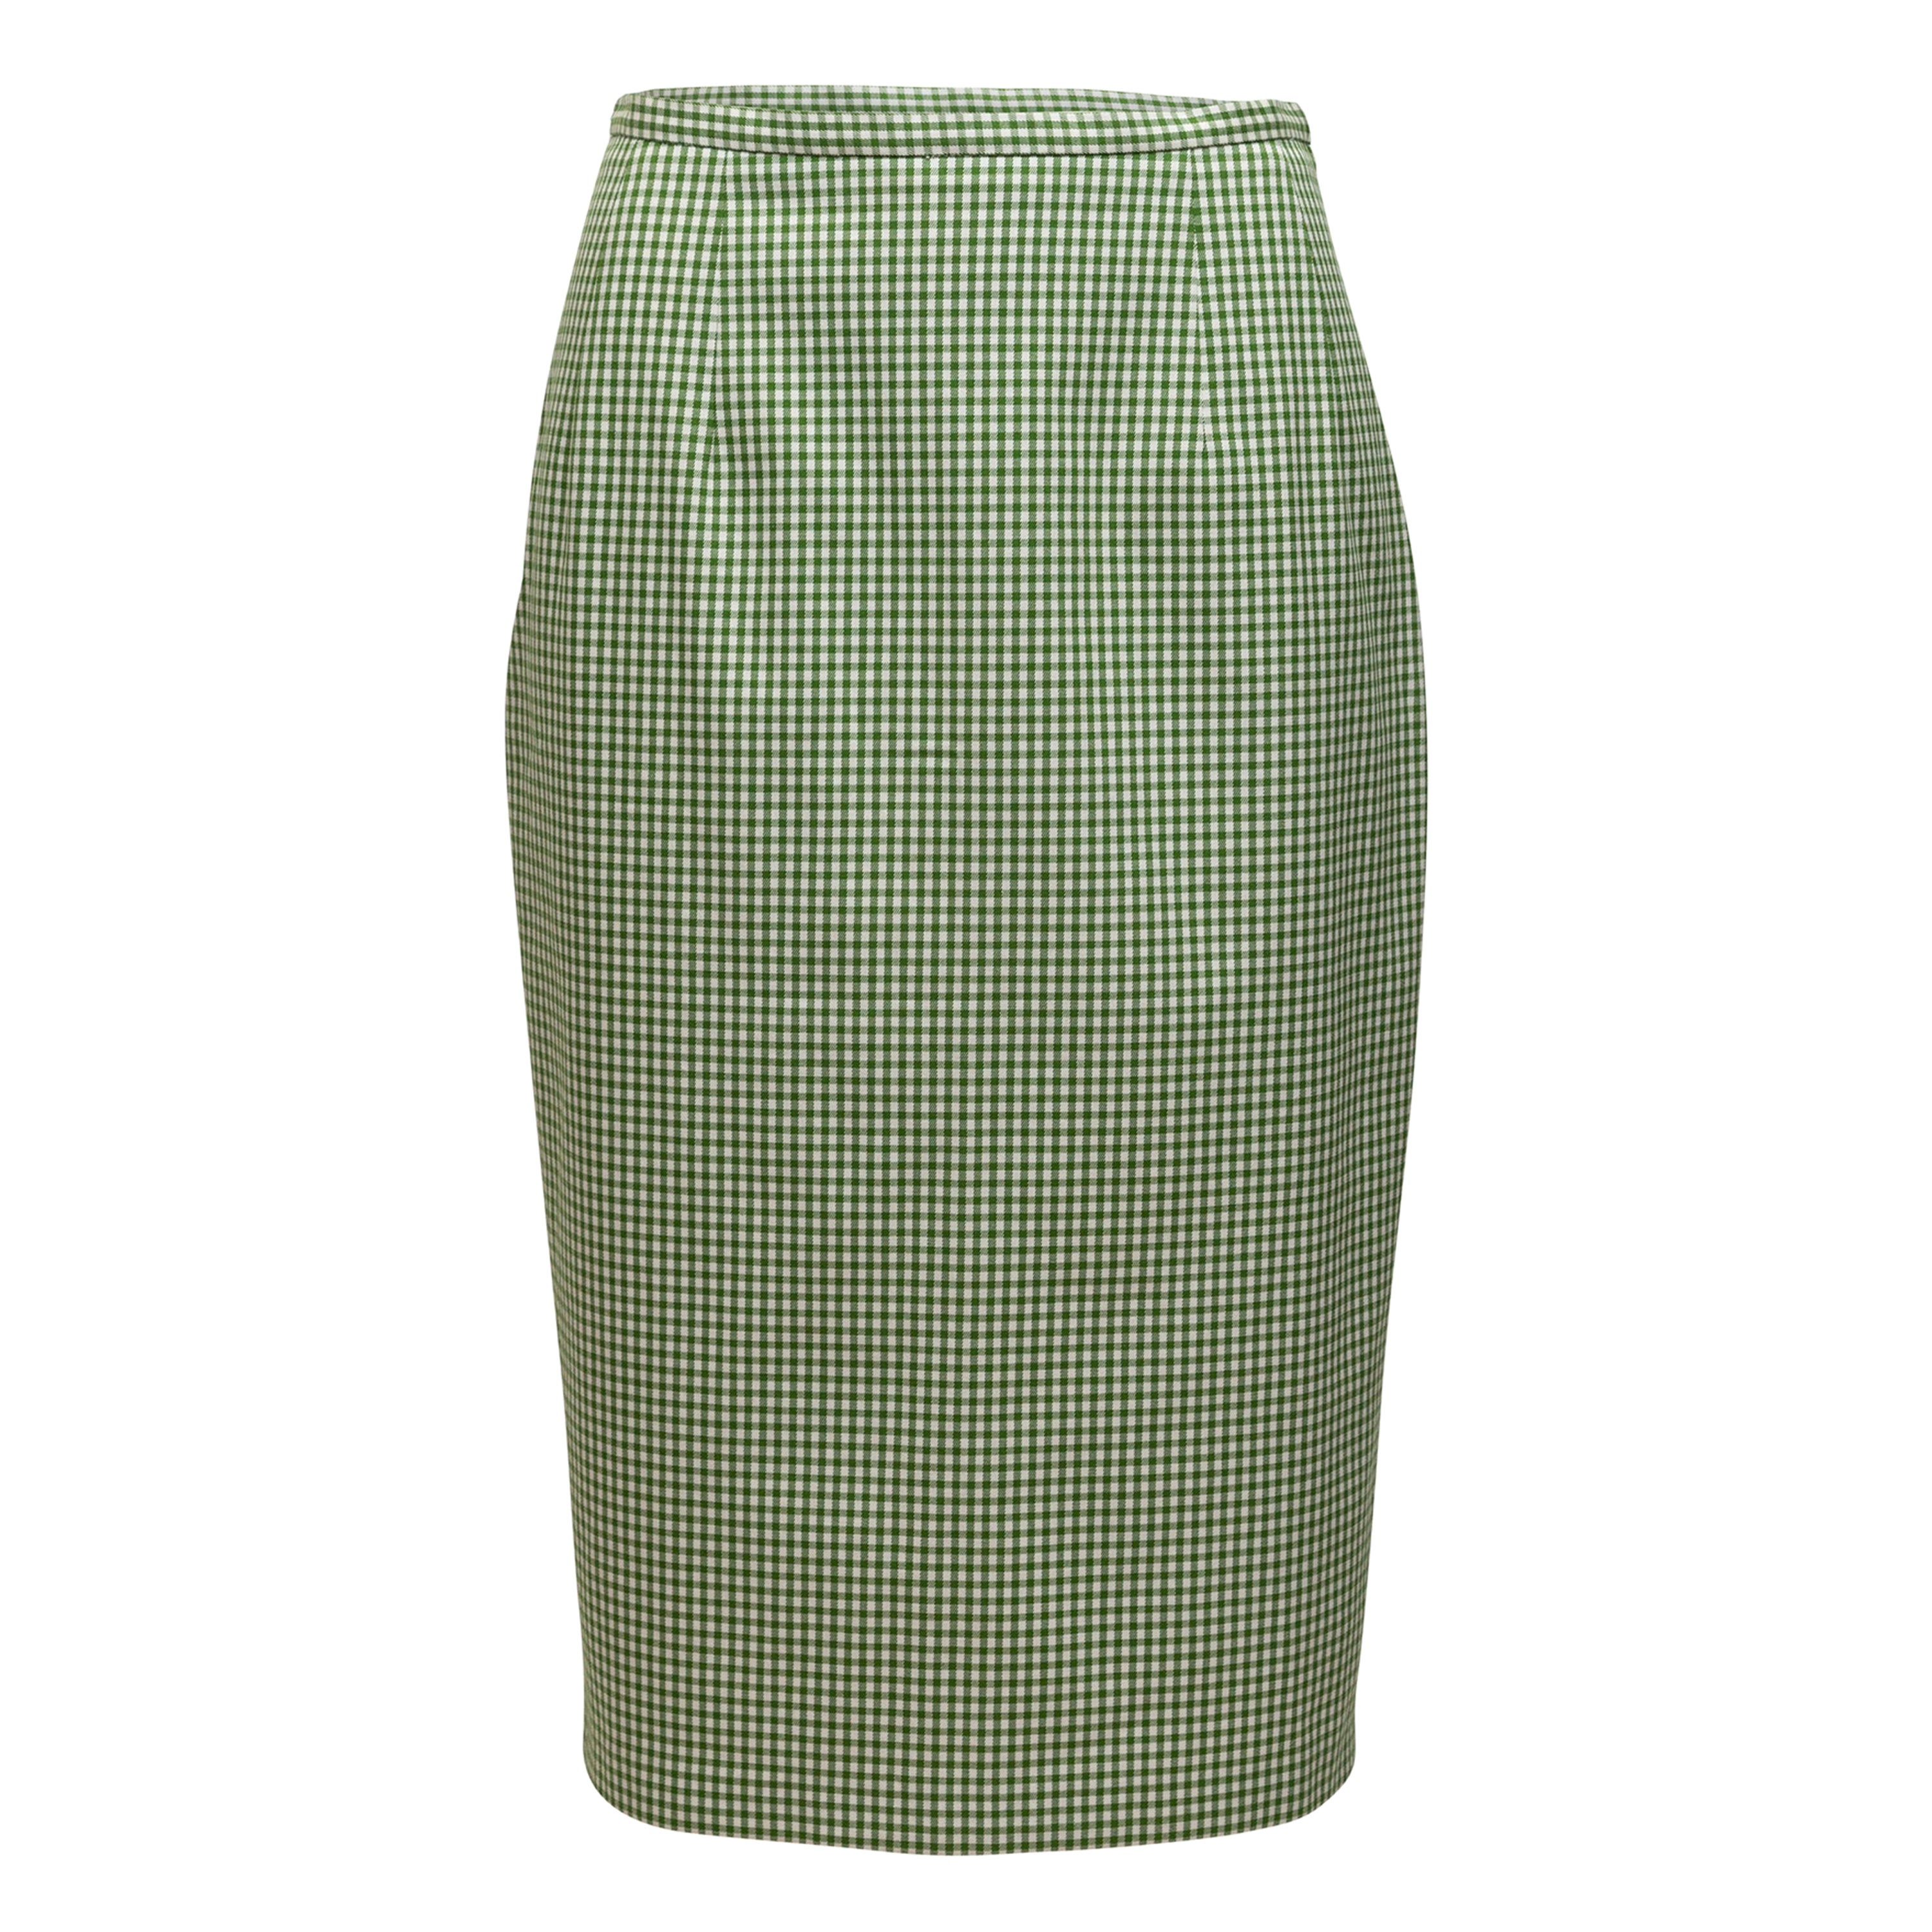 Michael Kors Green & White Collection Gingham Pencil Skirt